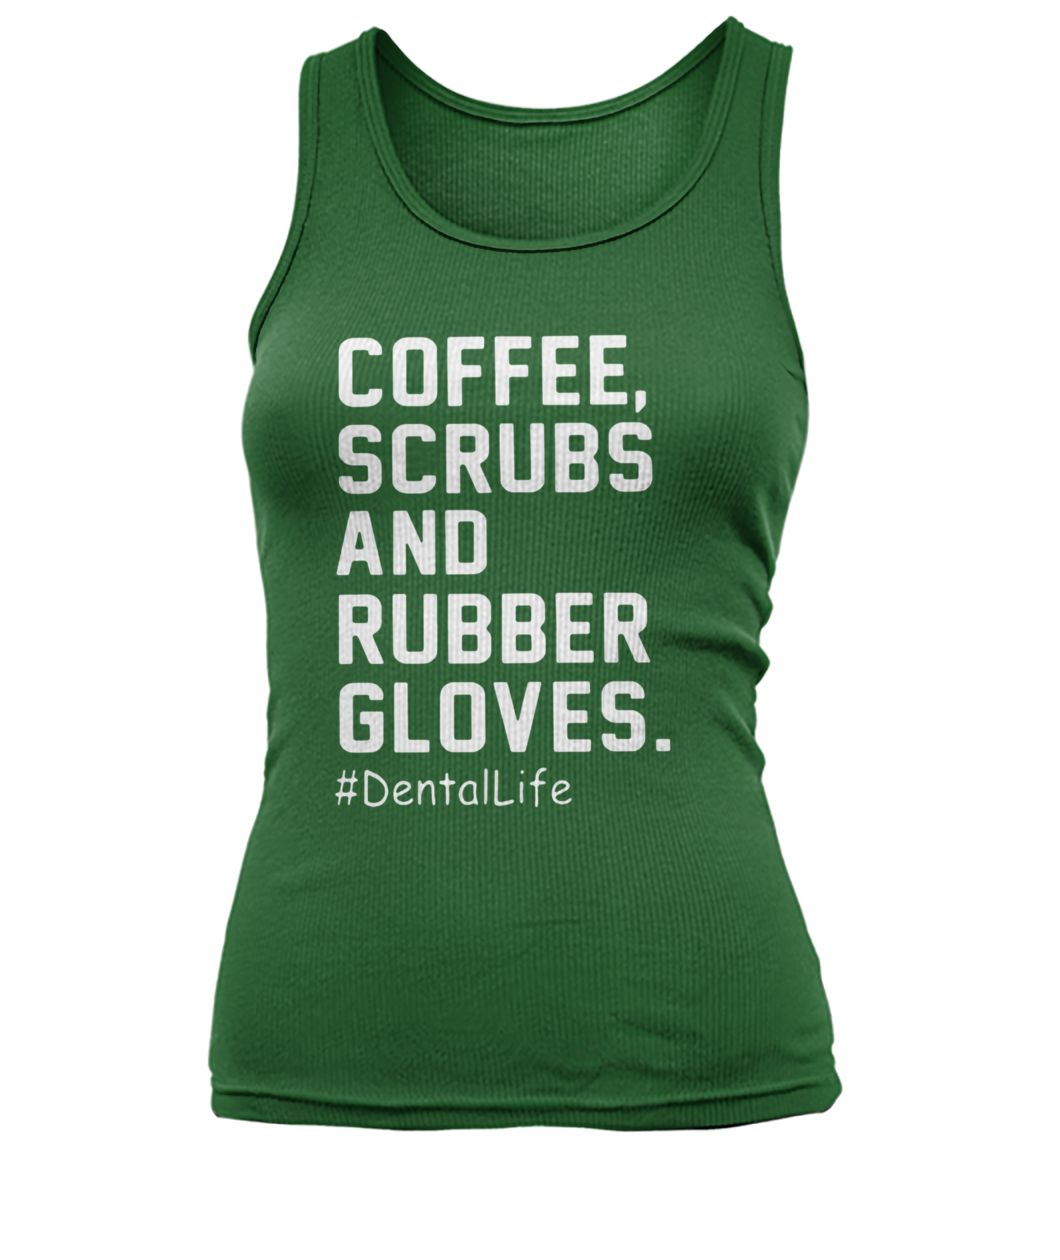 Coffee scrubs and rubber gloves dentallife women's tank top